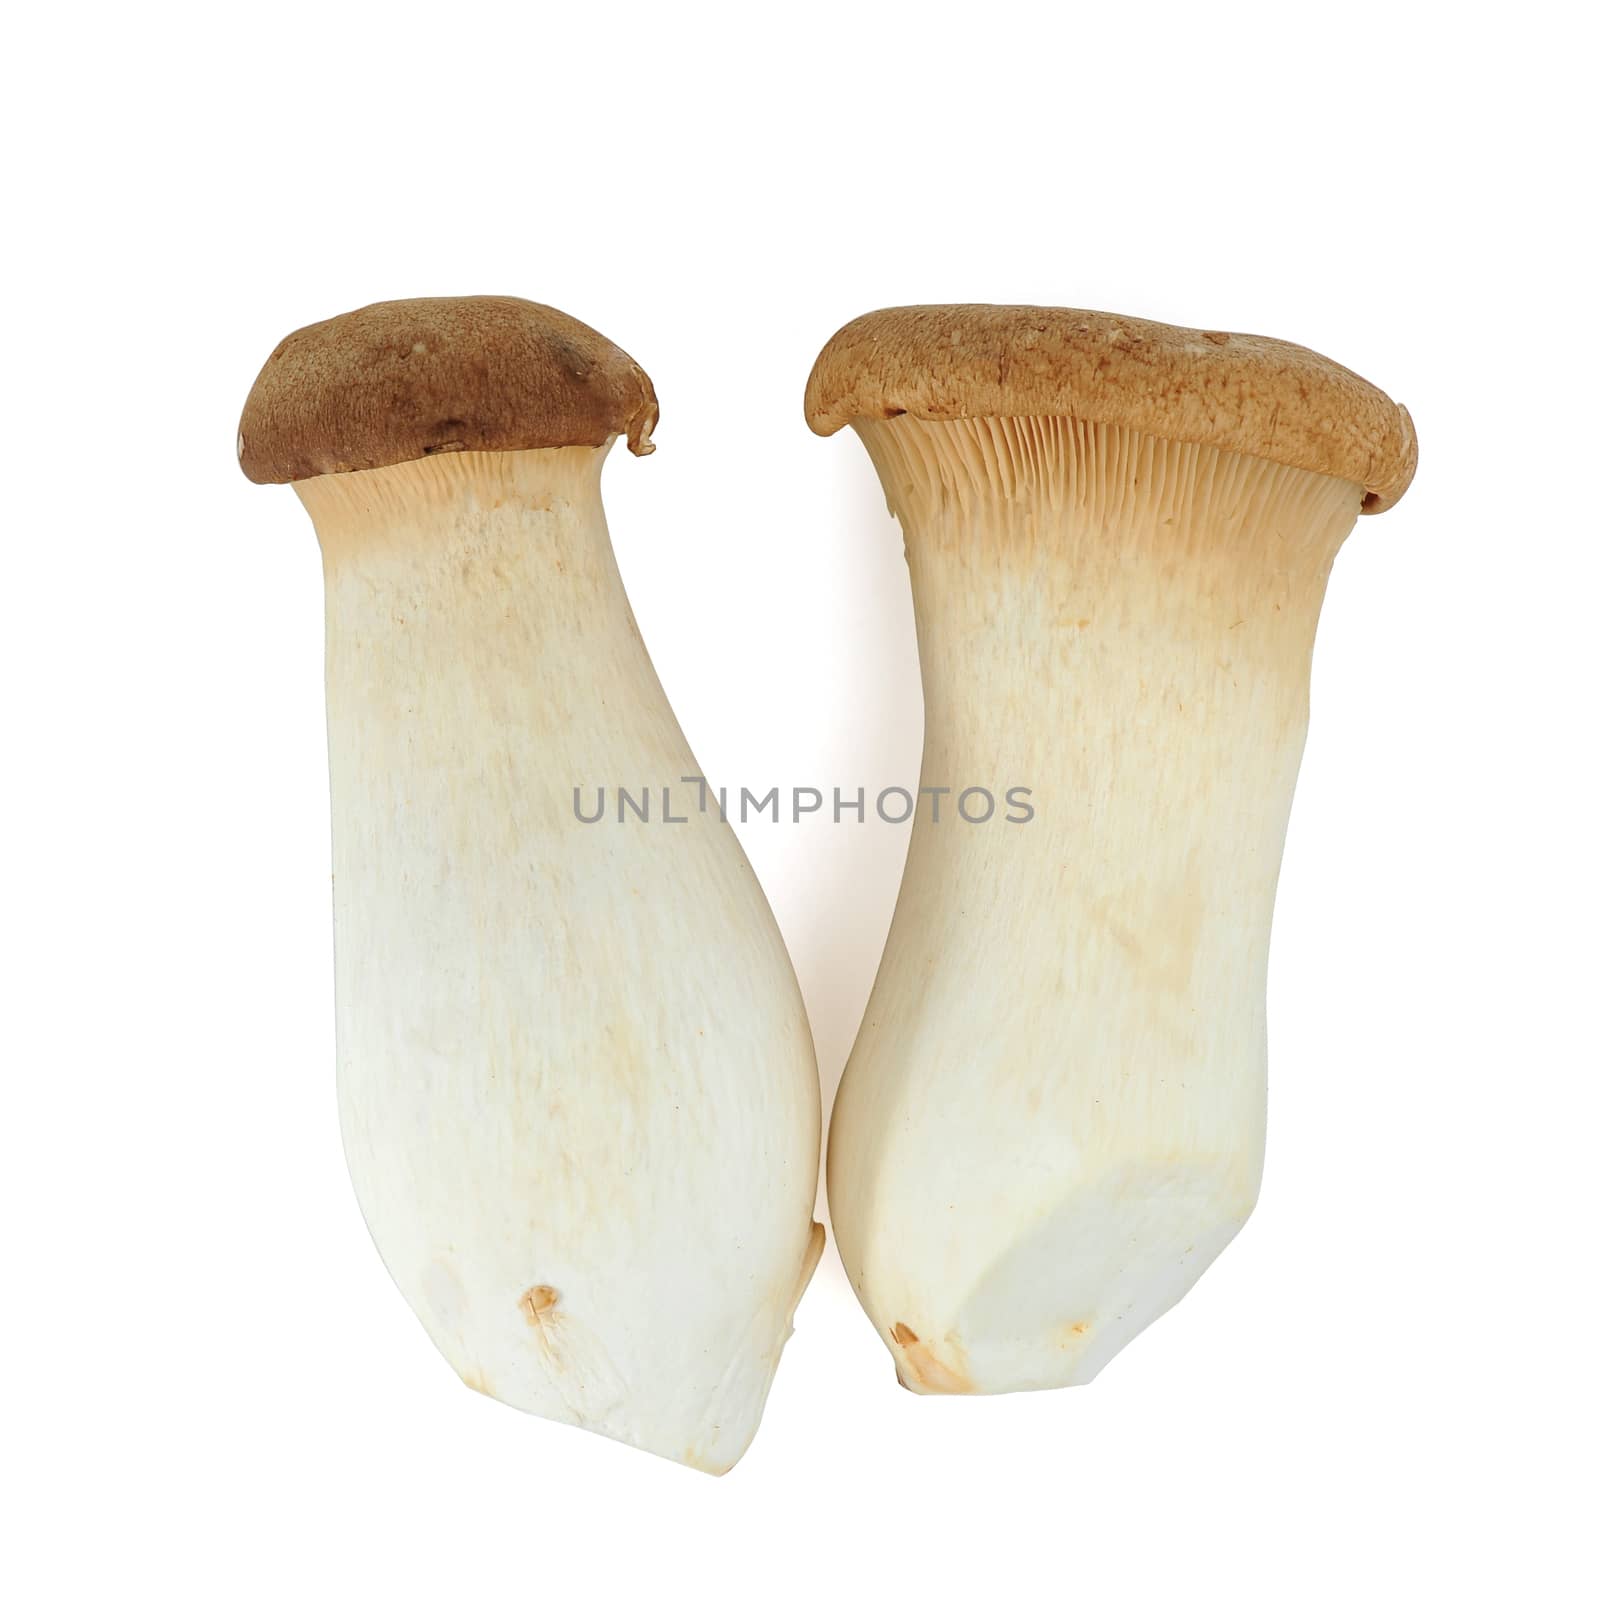 Edible Mushroom by antpkr